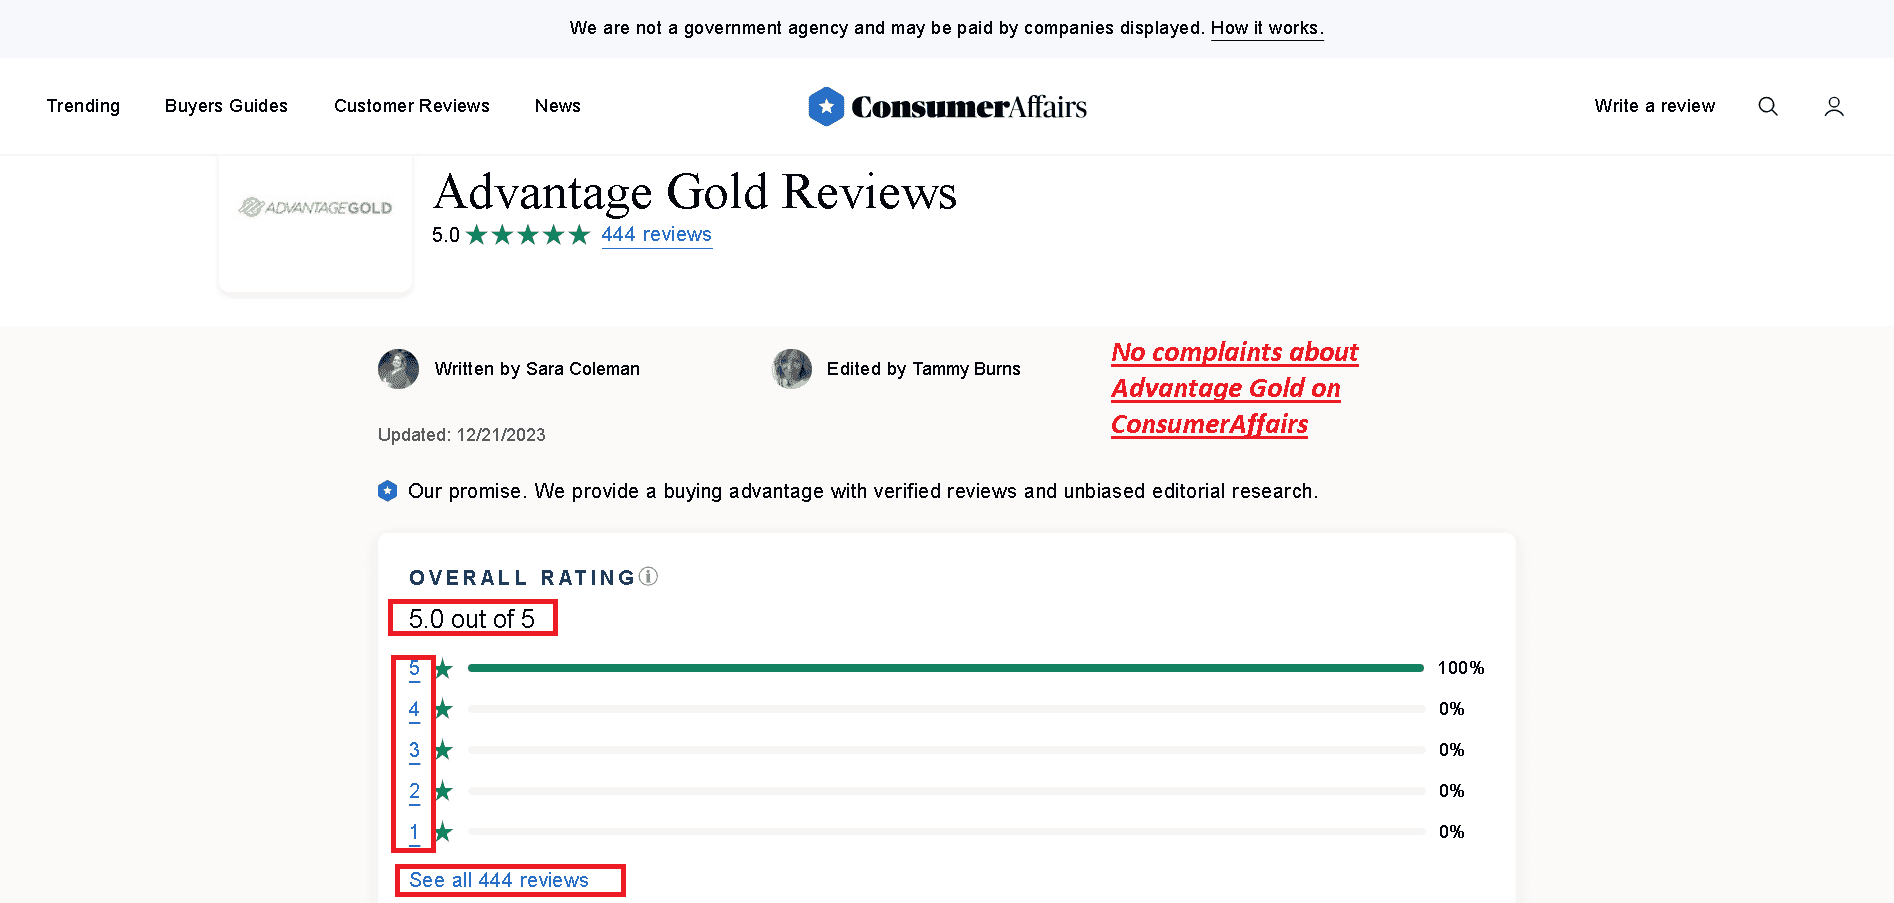 Advantage Gold has no complaints and negative reviews on ConsumerAffairs